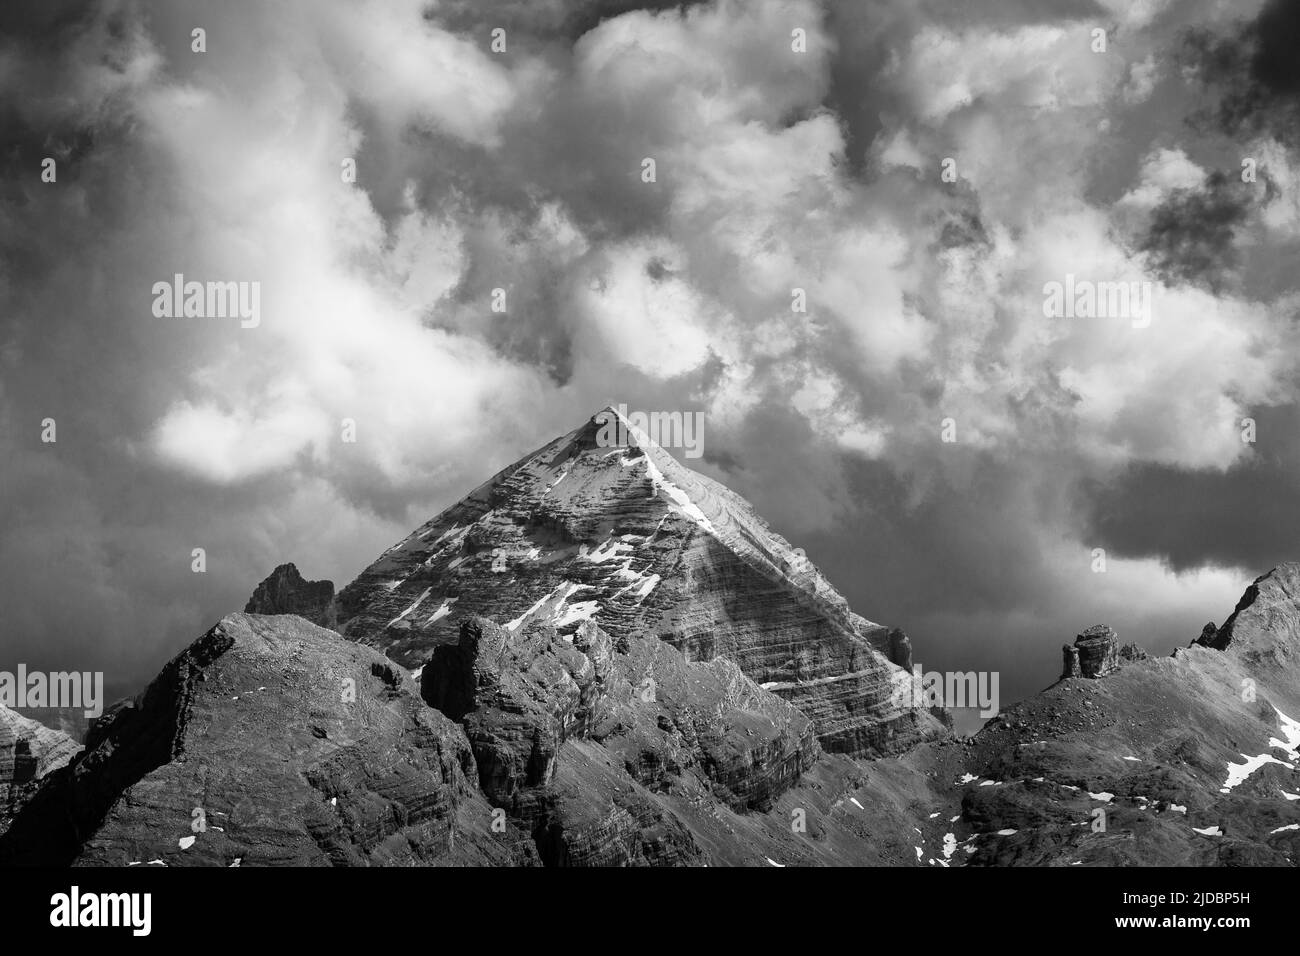 View on Tofana di Rozes mountain peak. Dramatic sky. Sunlight and dark clouds. The Dolomites. Italian Alps. Europe. Stock Photo